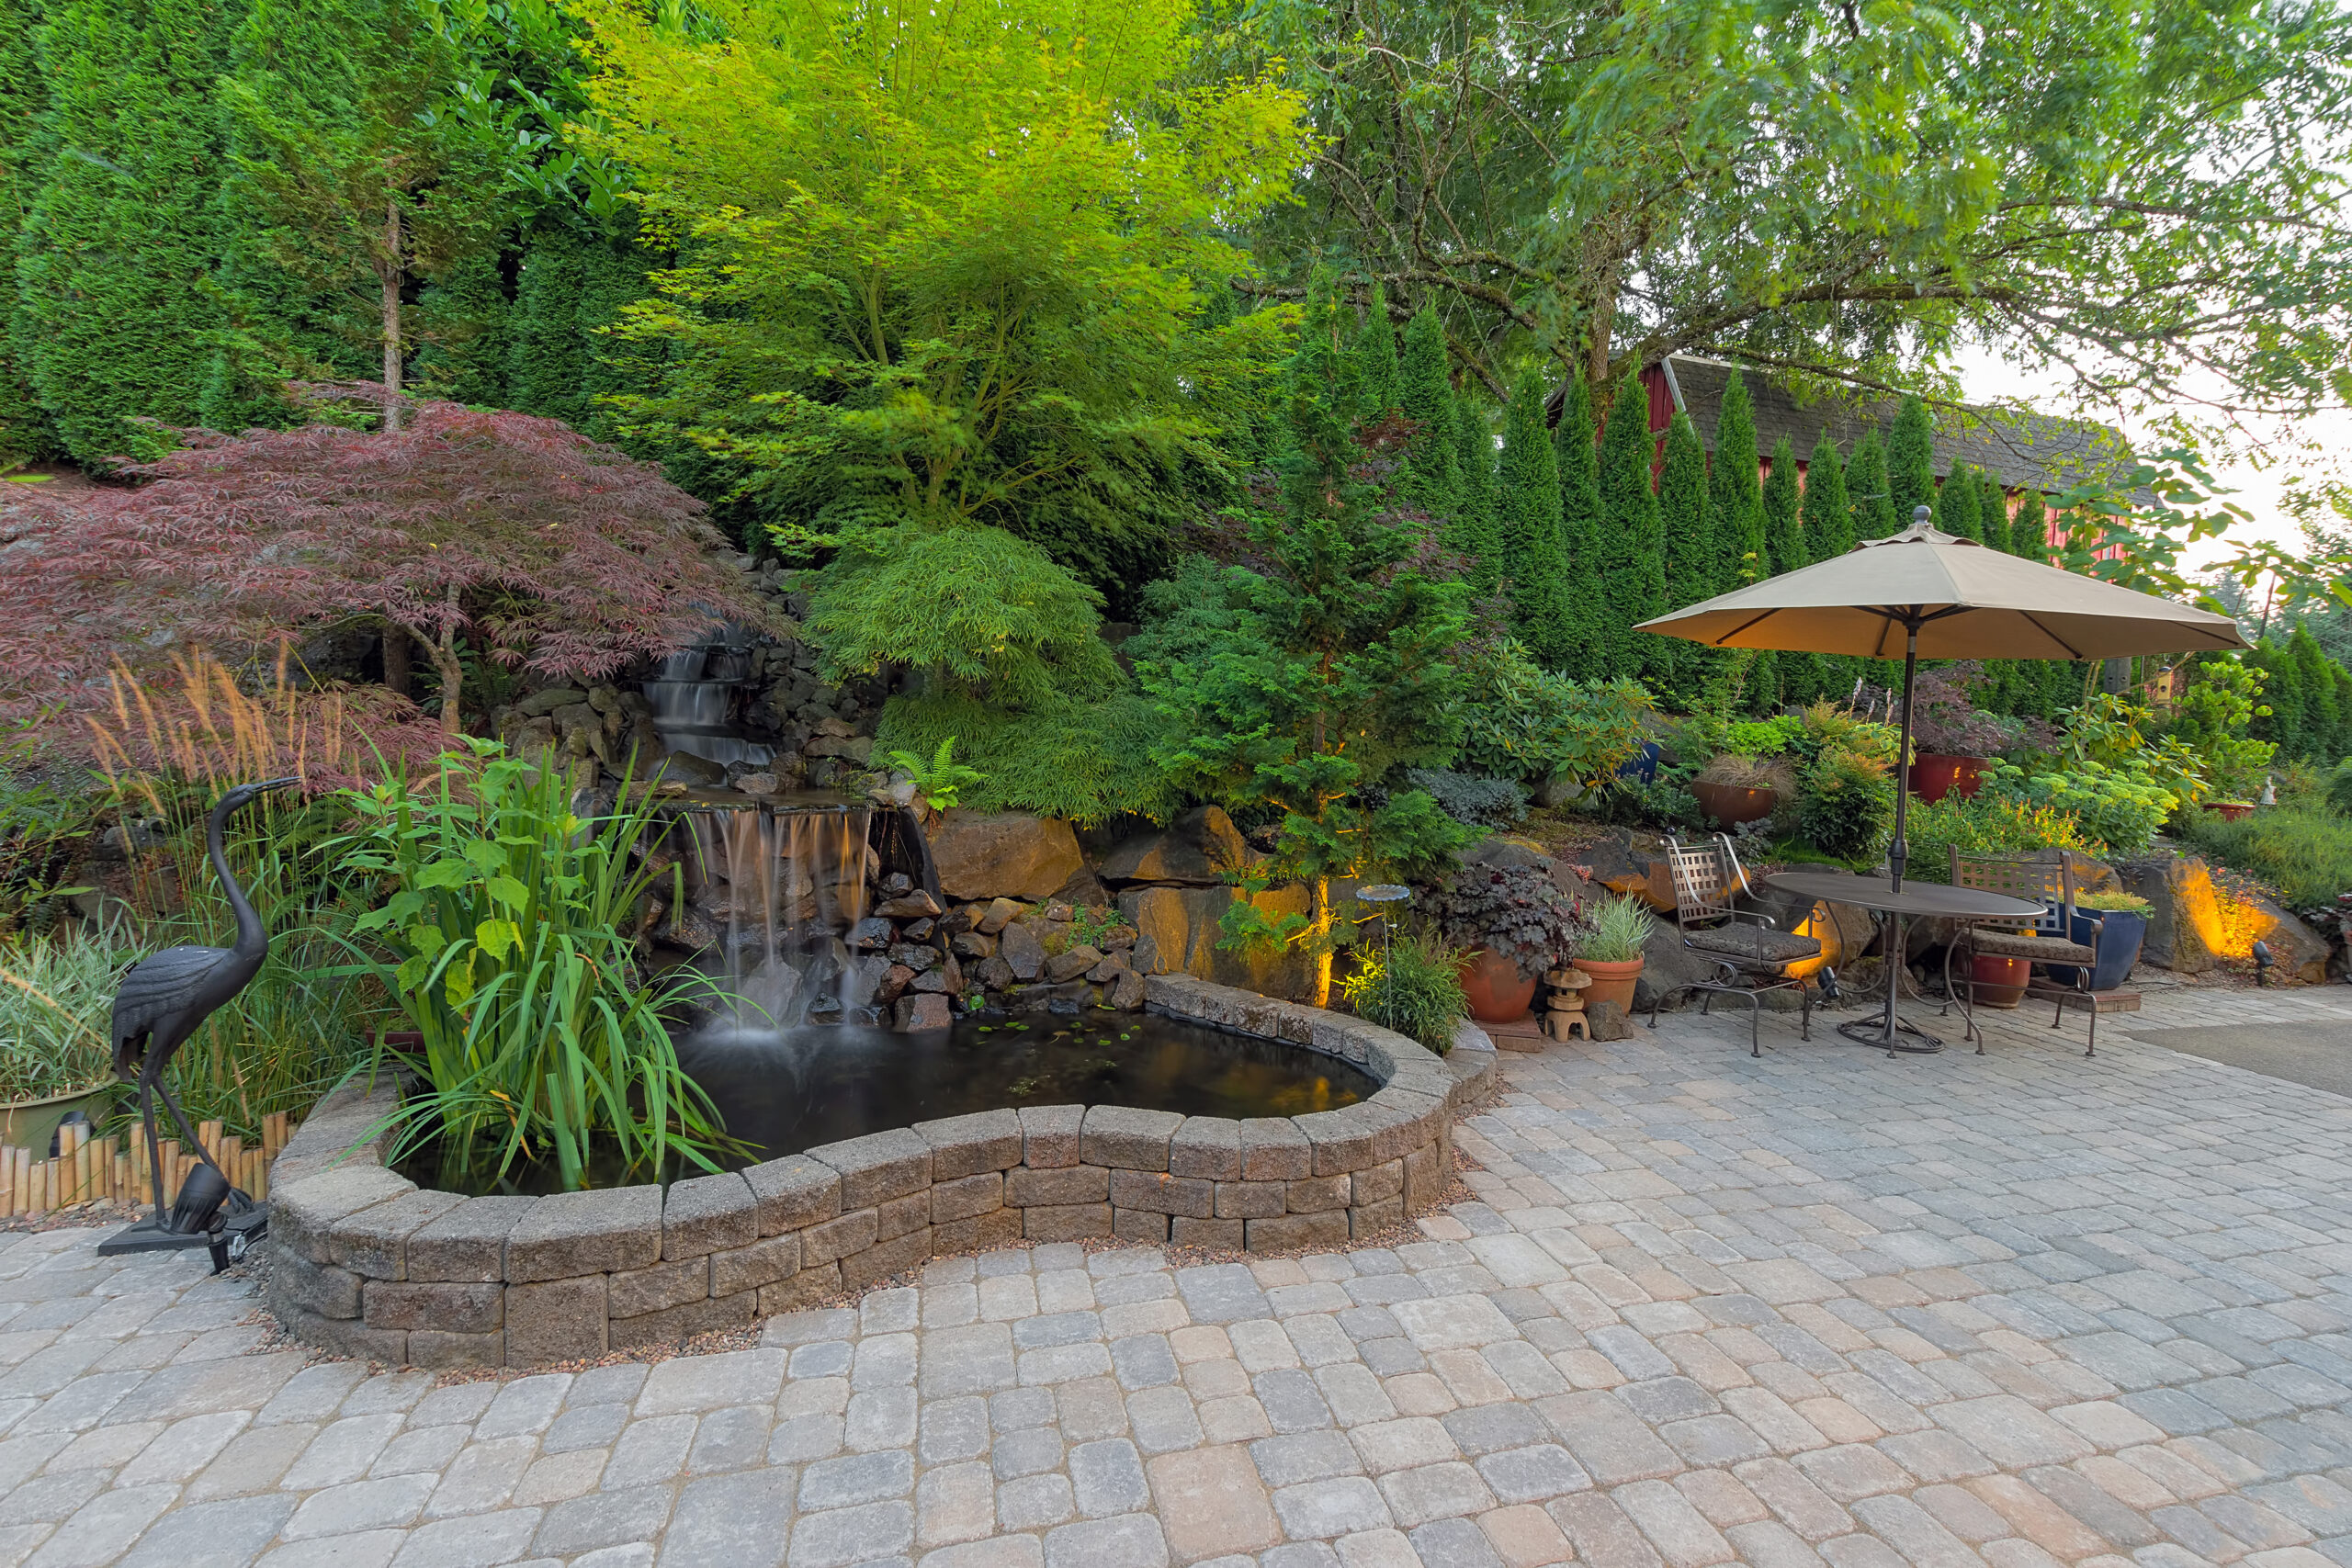 Backyard Garden landscaping with waterfall pond trees plants trellis decor furniture brick pavers patio hardscape